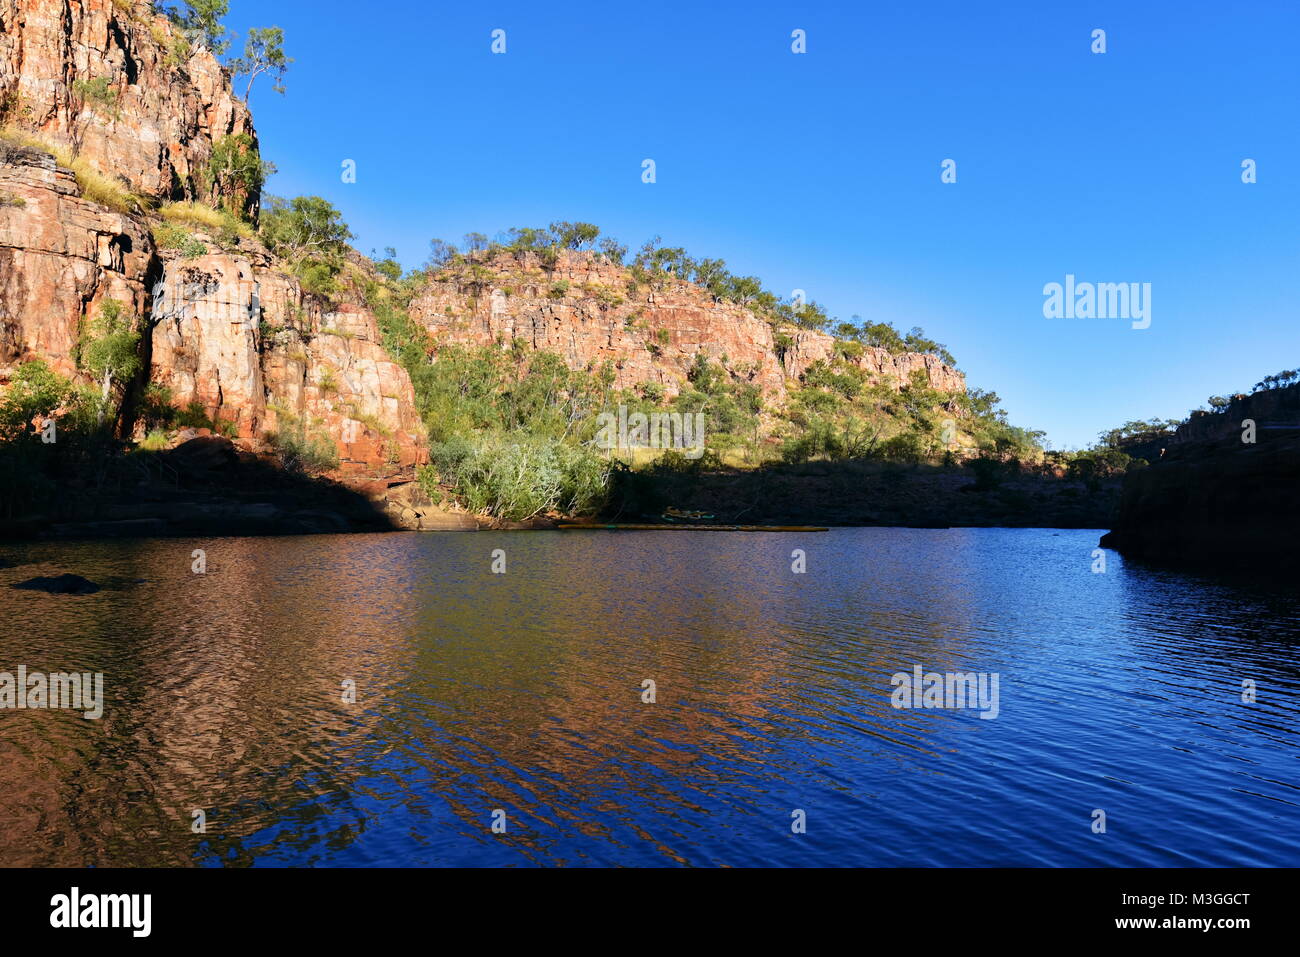 Magnificent Katherine gorge in Western Australia Stock Photo - Alamy